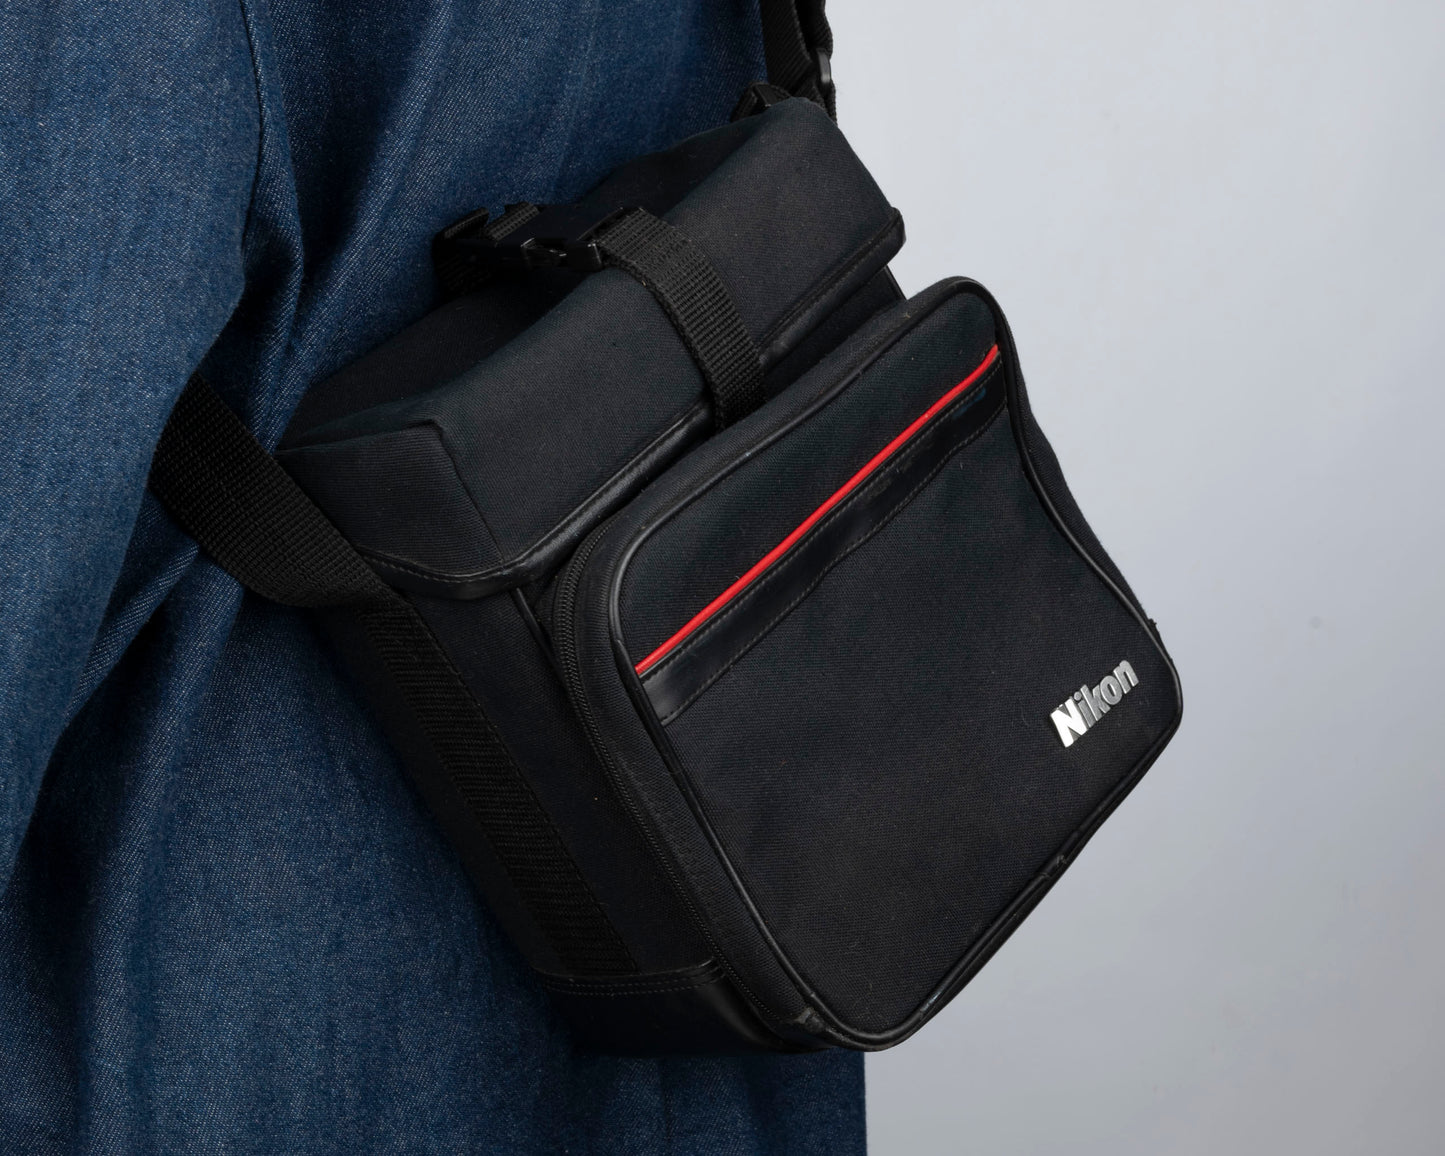 Nikon mid-sized black with red trim camera bag